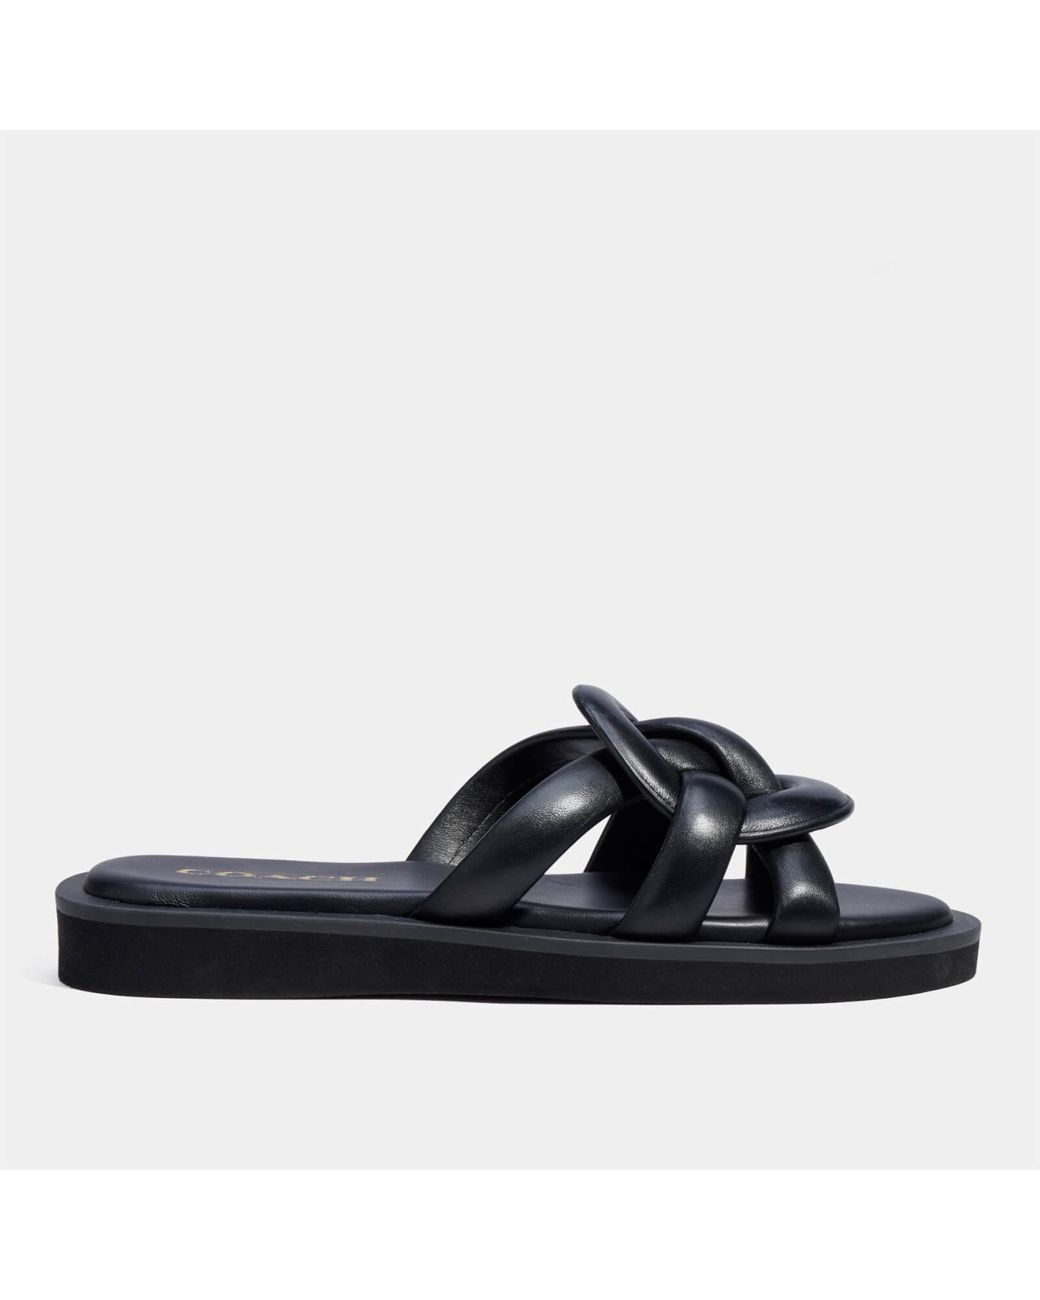 COACH Georgie Leather Slide Sandals in Black | Lyst Canada